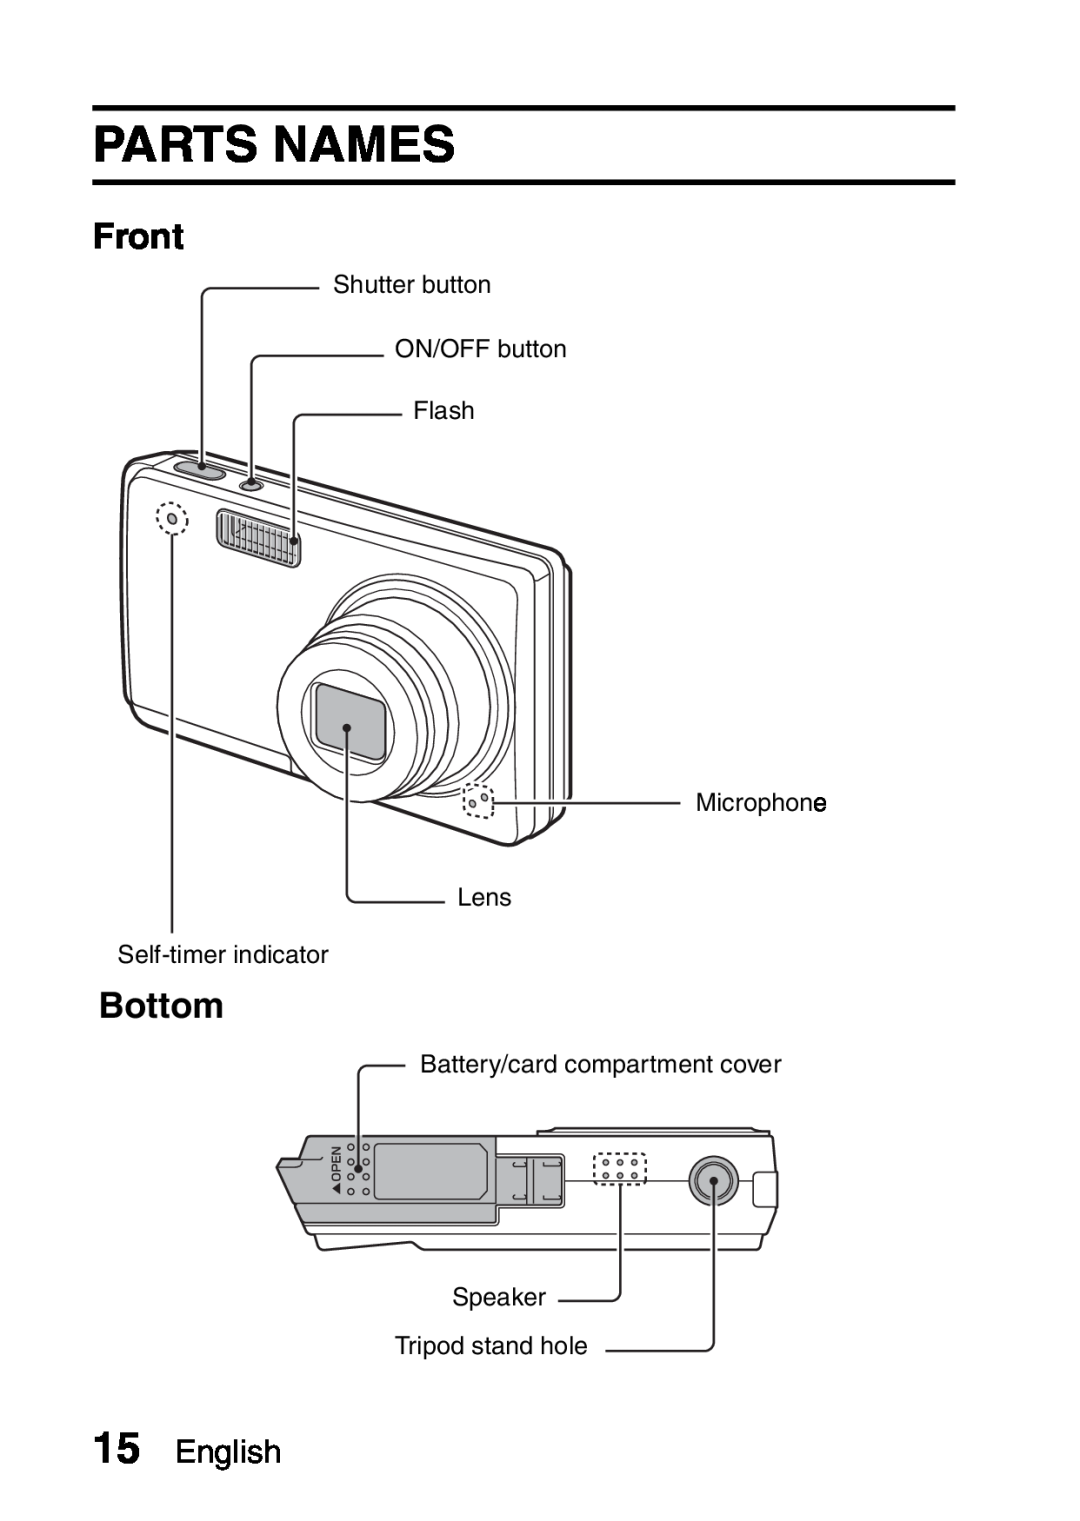 Samsung R50 instruction manual Parts Names, Front, Bottom, English 